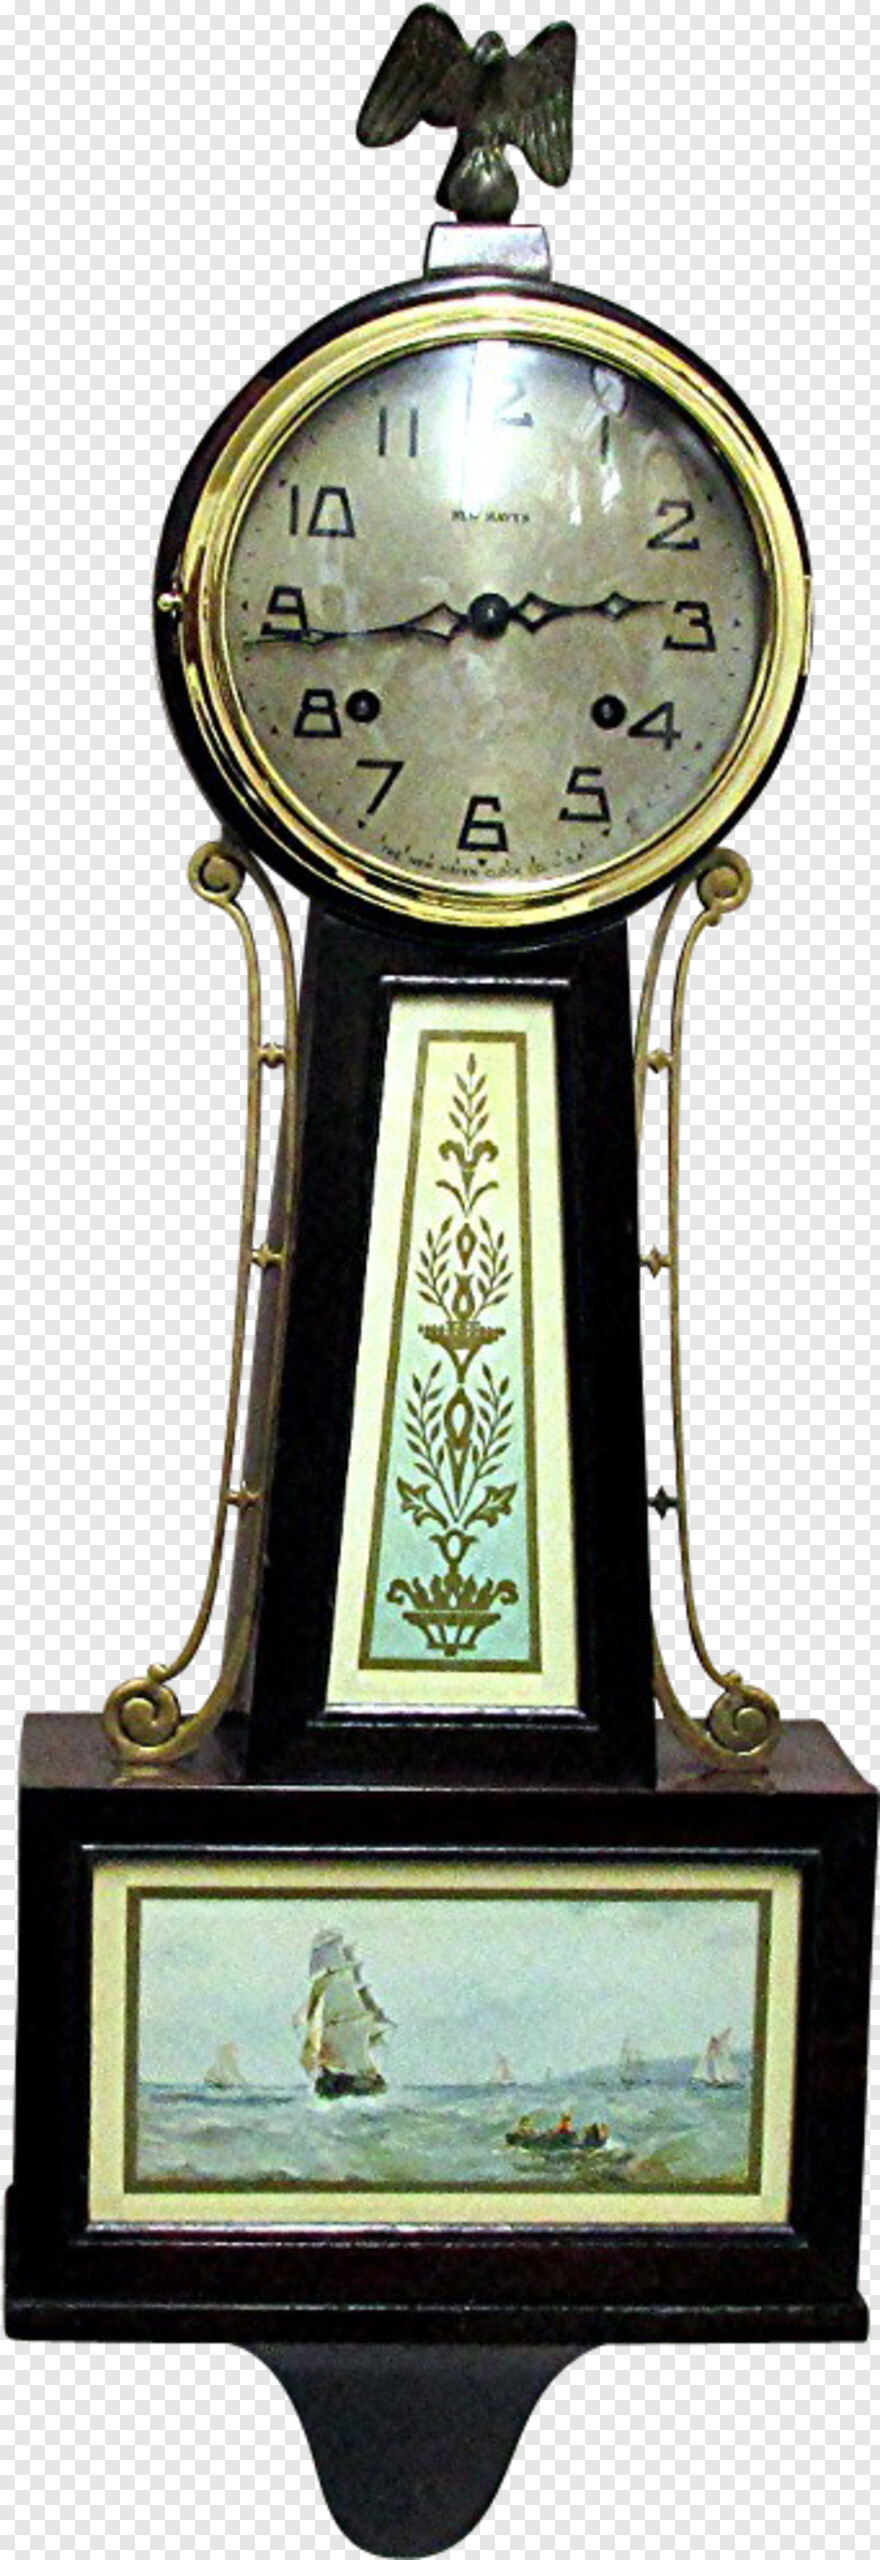 clock-logo # 411024